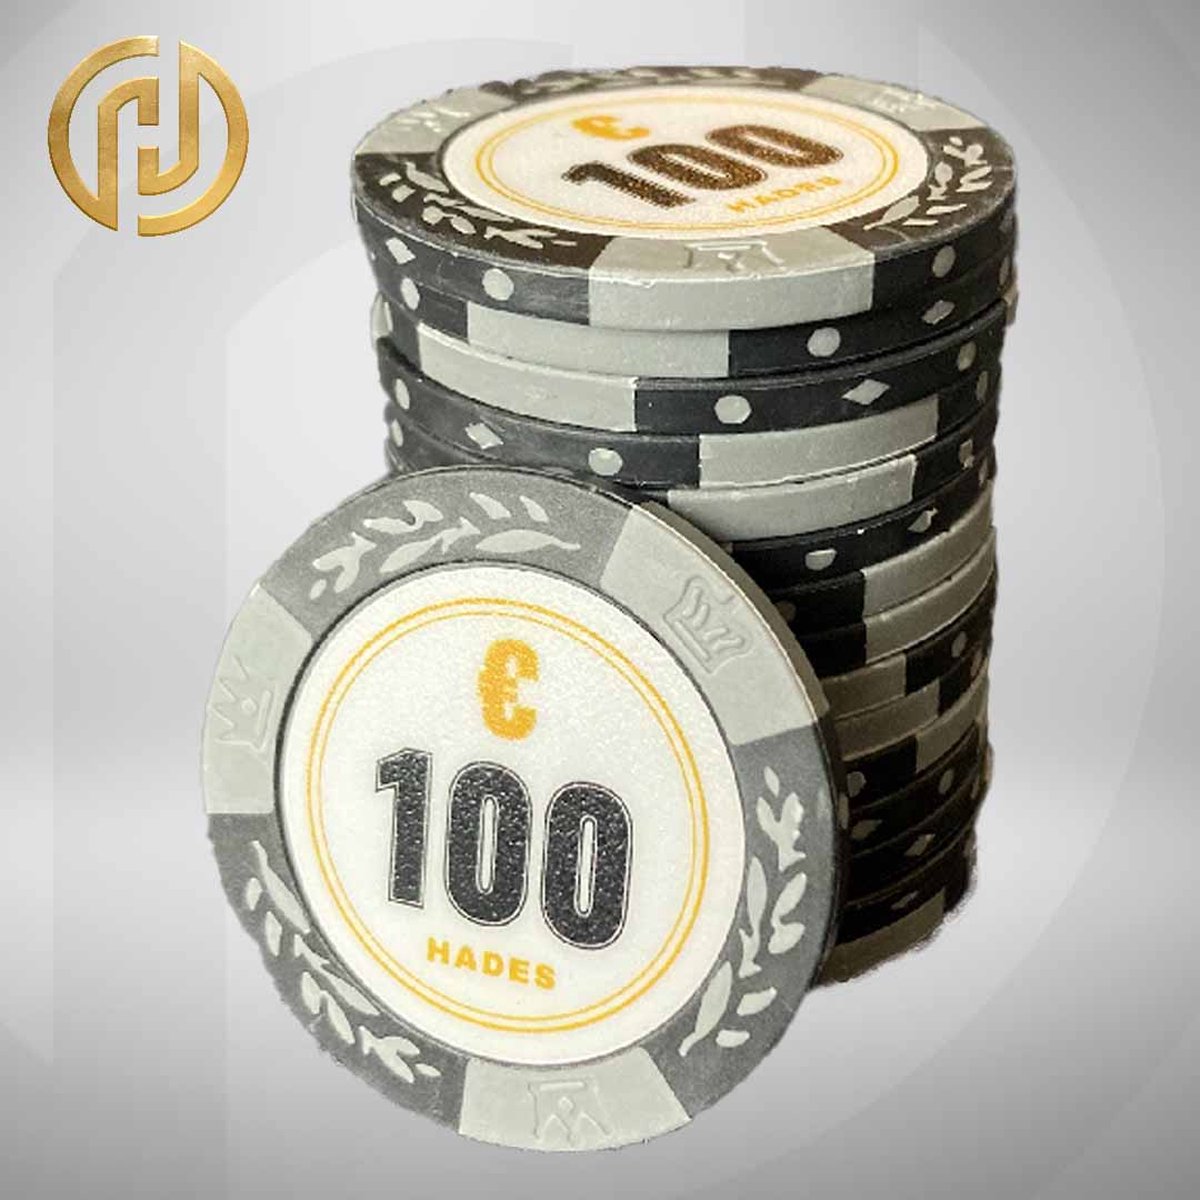 Mec Hades Cashgame Classic Poker Chips €100 grijs (25 stuks) pokerchips pokerfiches poker fiches clay chips pokerspel pokerset poker set